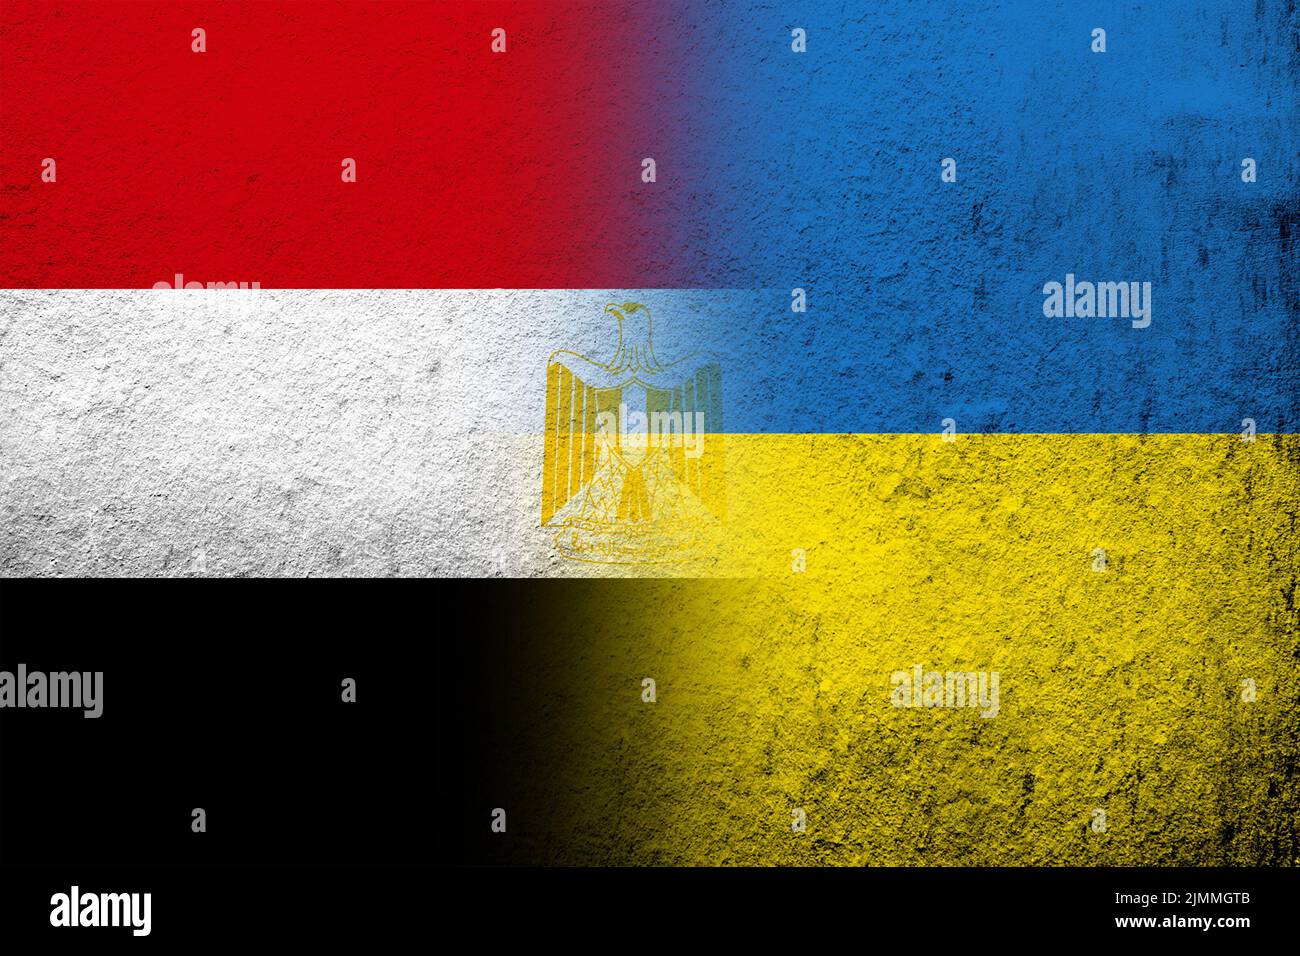 The Arab Republic of Egypt National flag with National flag of Ukraine. Grunge background Stock Photo